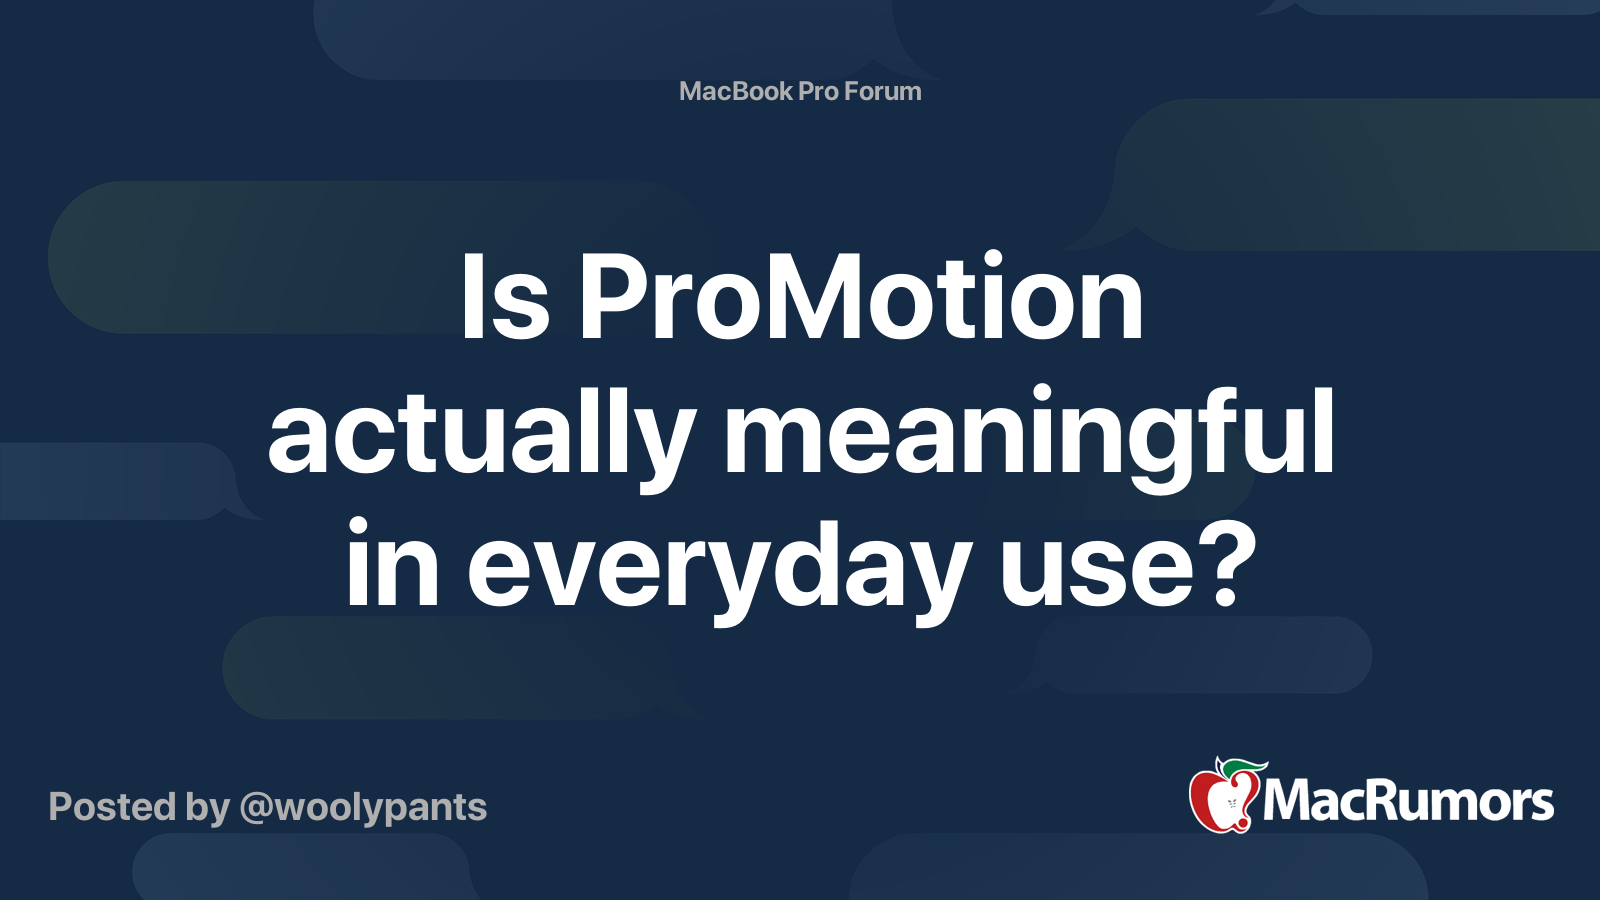 Promotion Pros